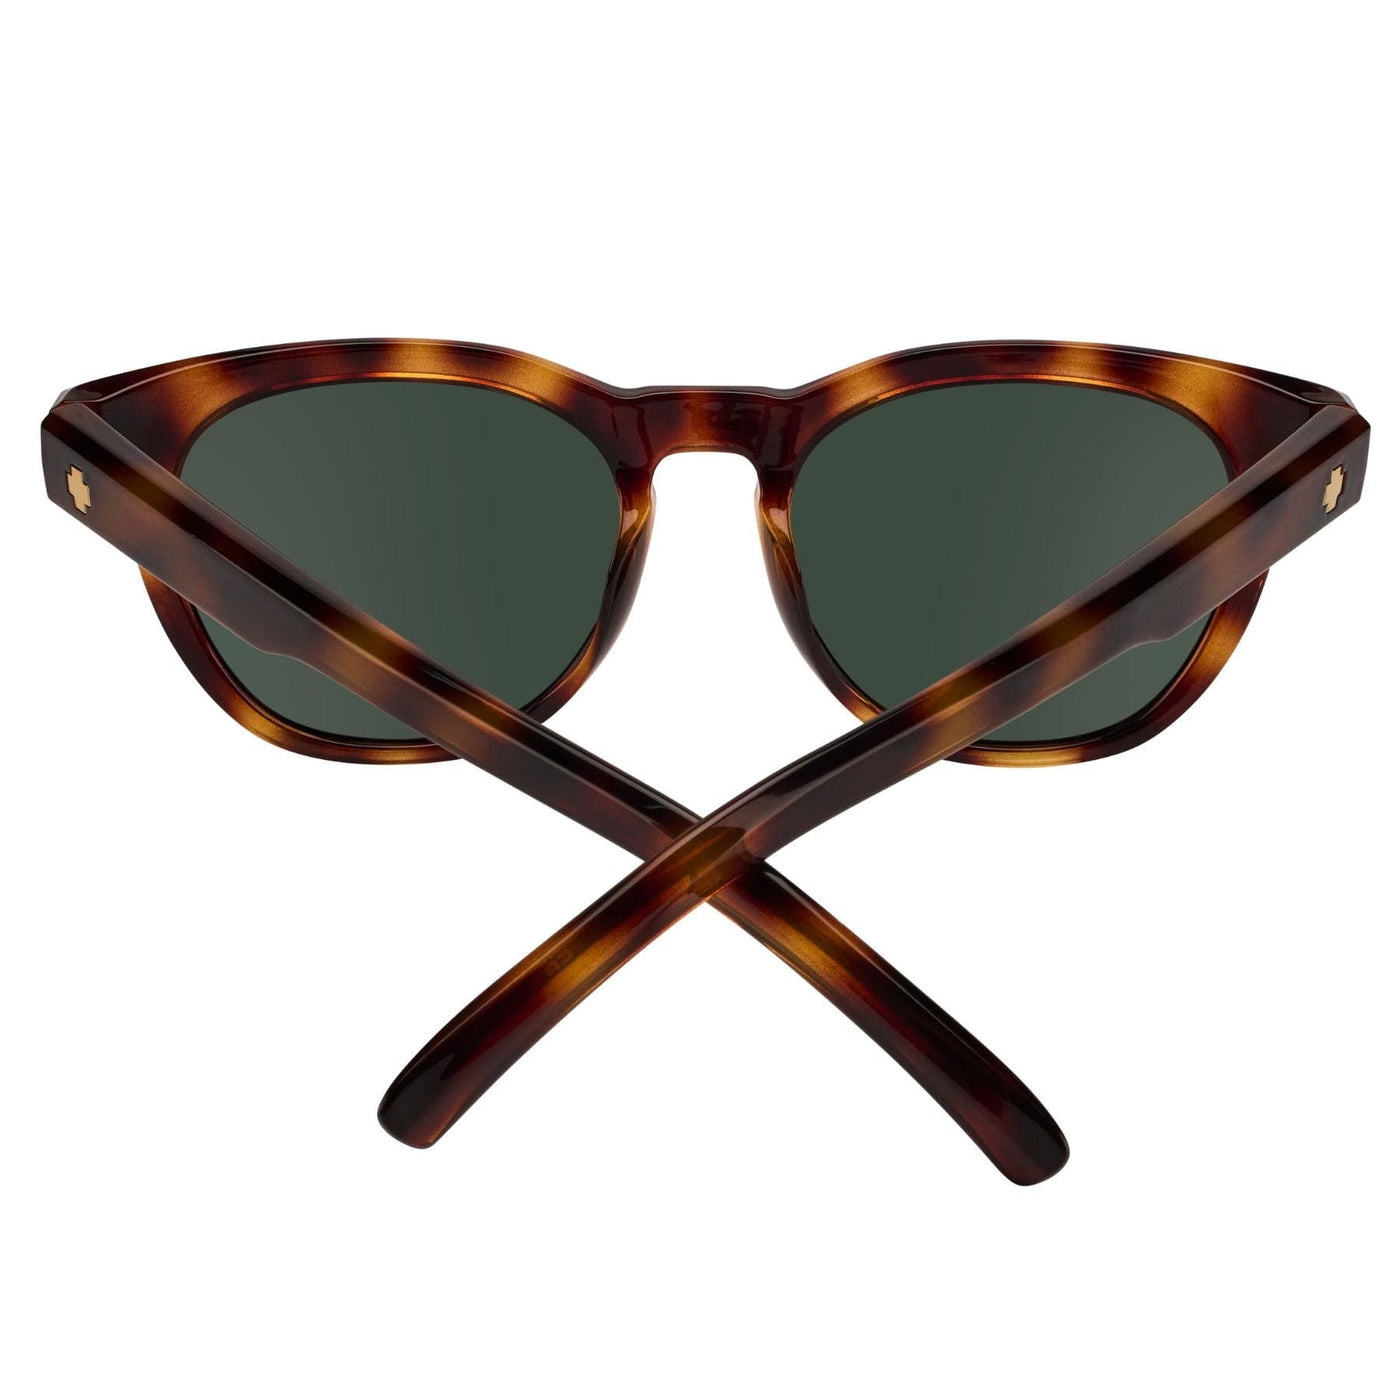 SPY CEDROS Polarized Sunglasses, Happy Lens - Gray/Green 8Lines Shop - Fast Shipping